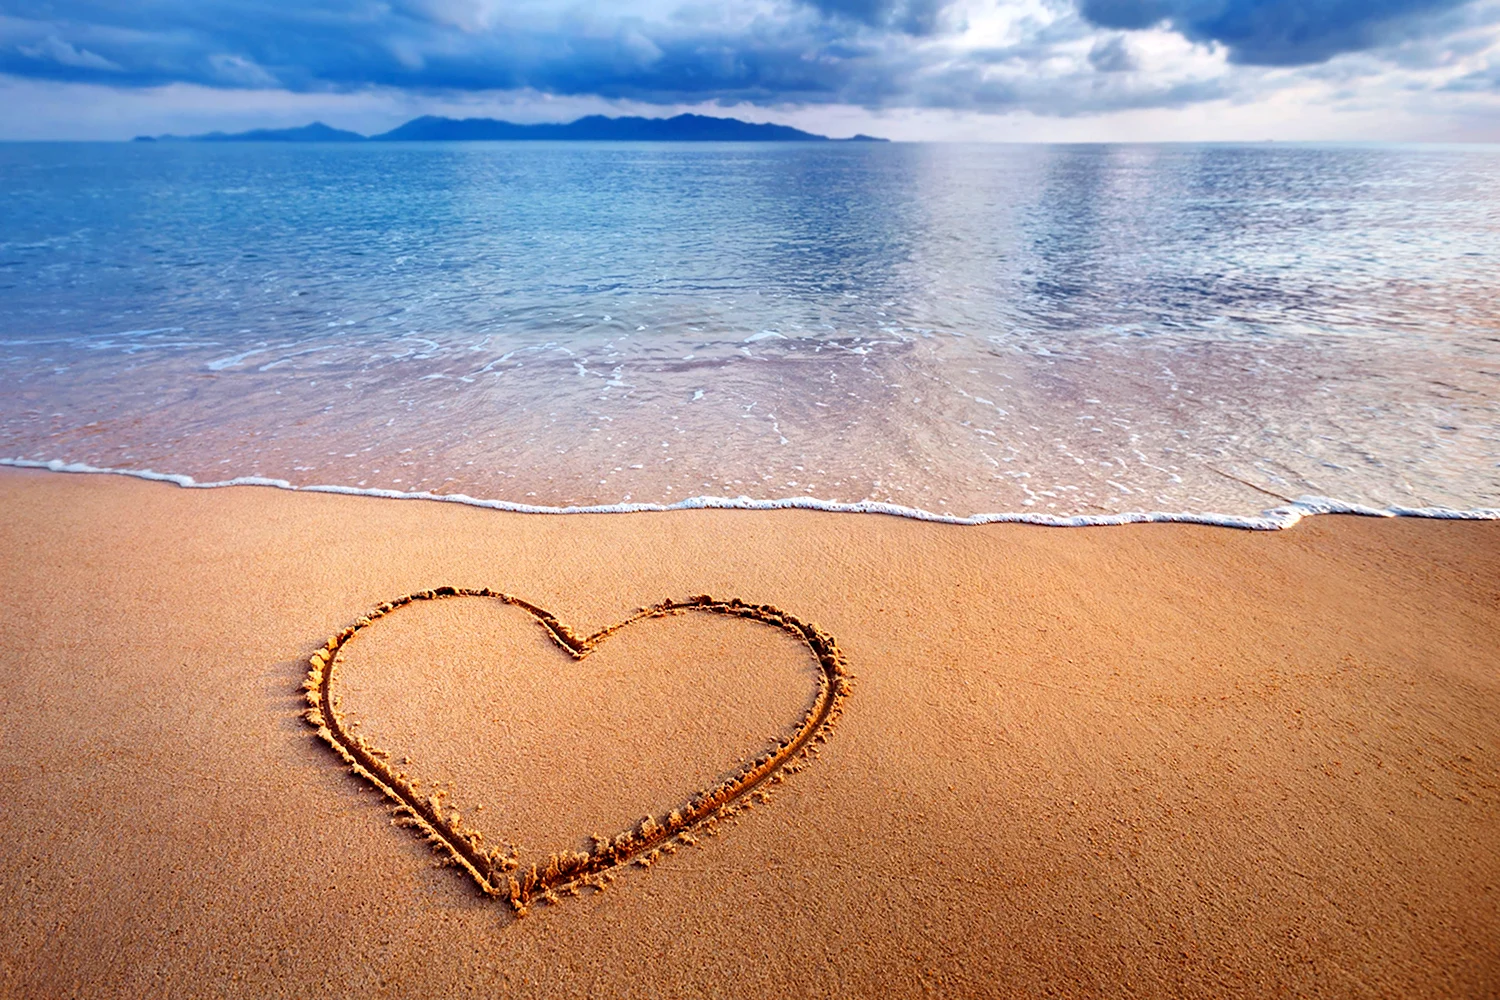 Сердце на песке у моря